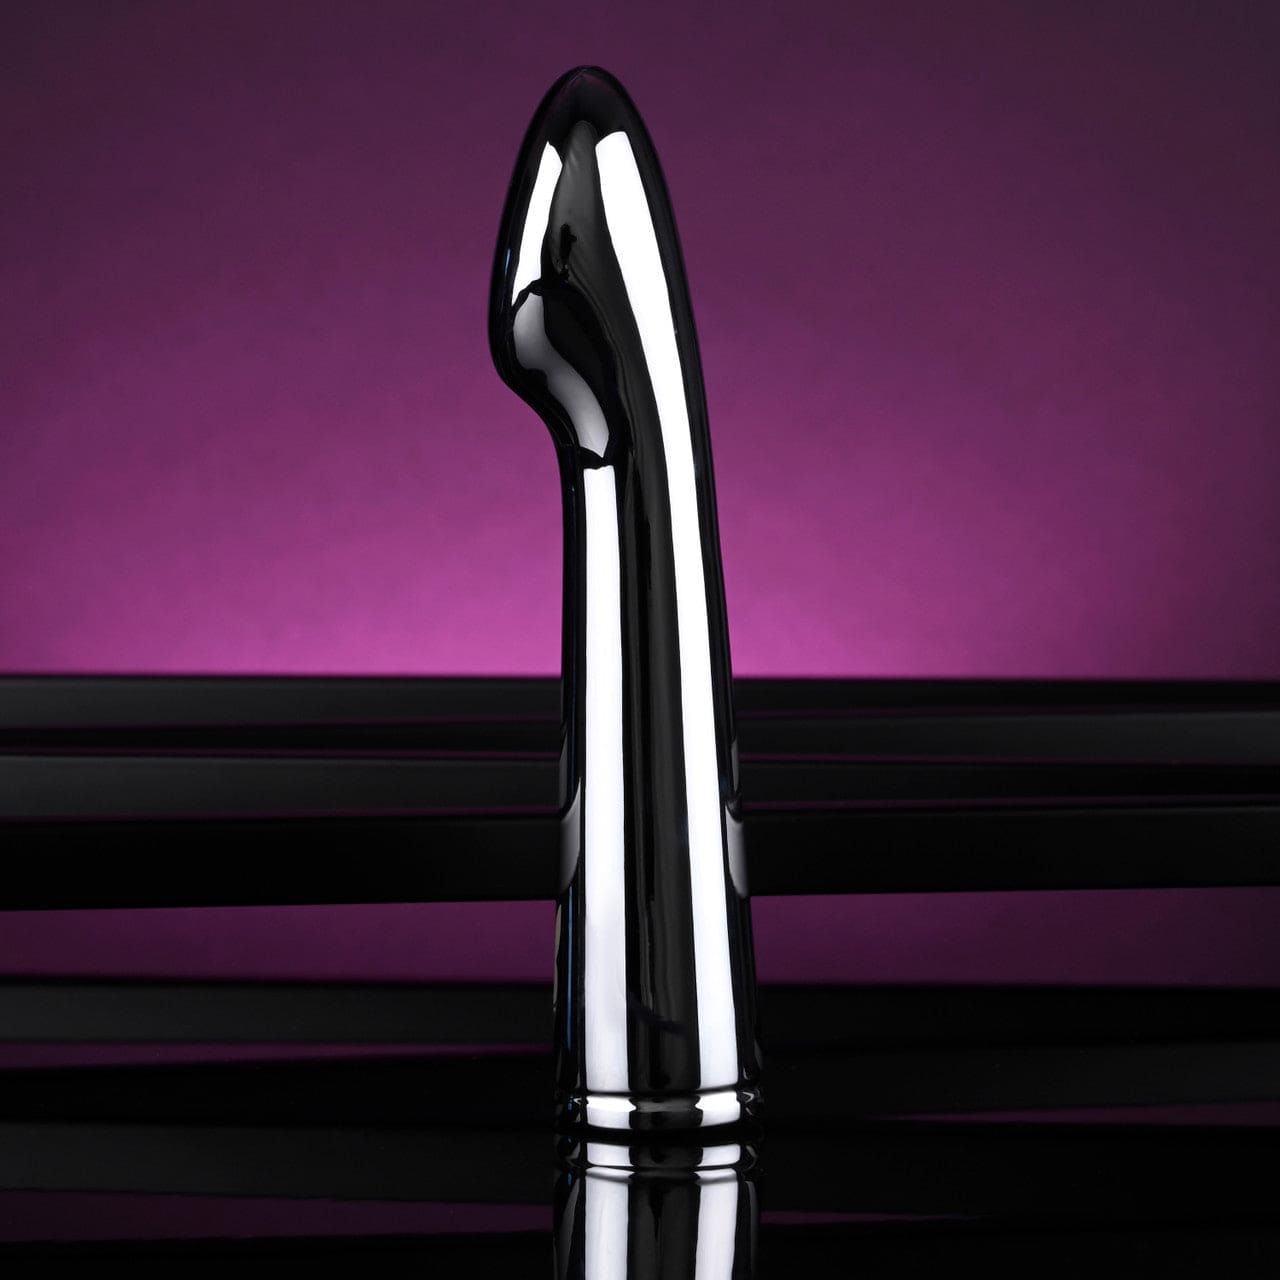 Playboy Pleasure Swoon Aluminum Vibrator - Rolik®